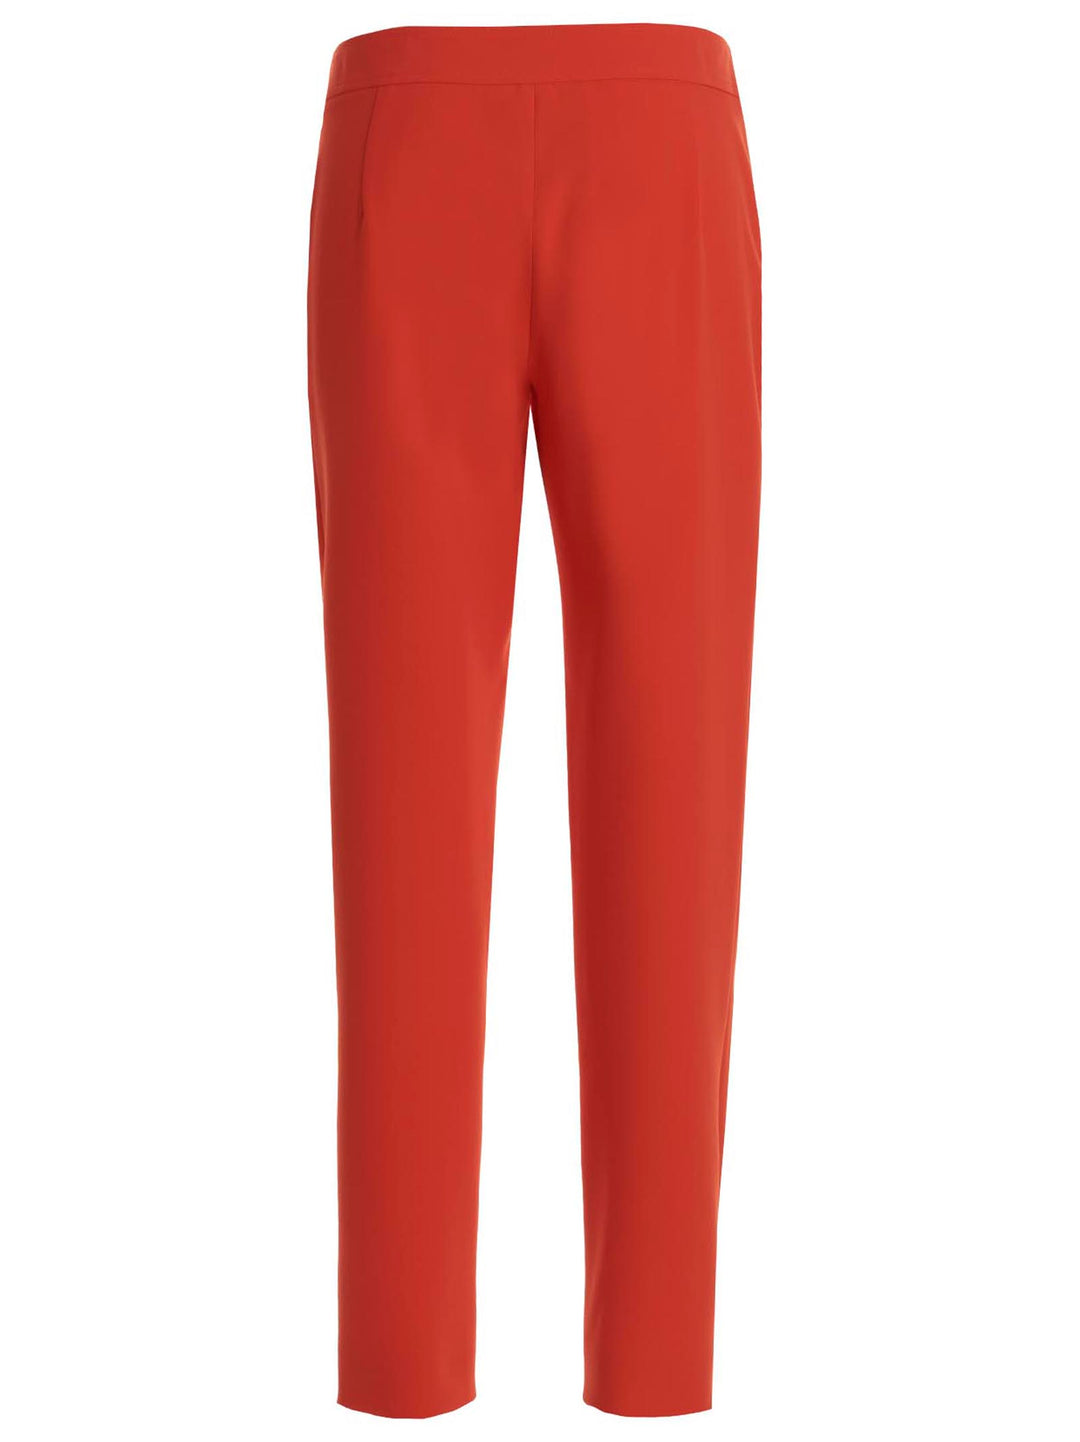 'Smiley' Pantaloni Rosso